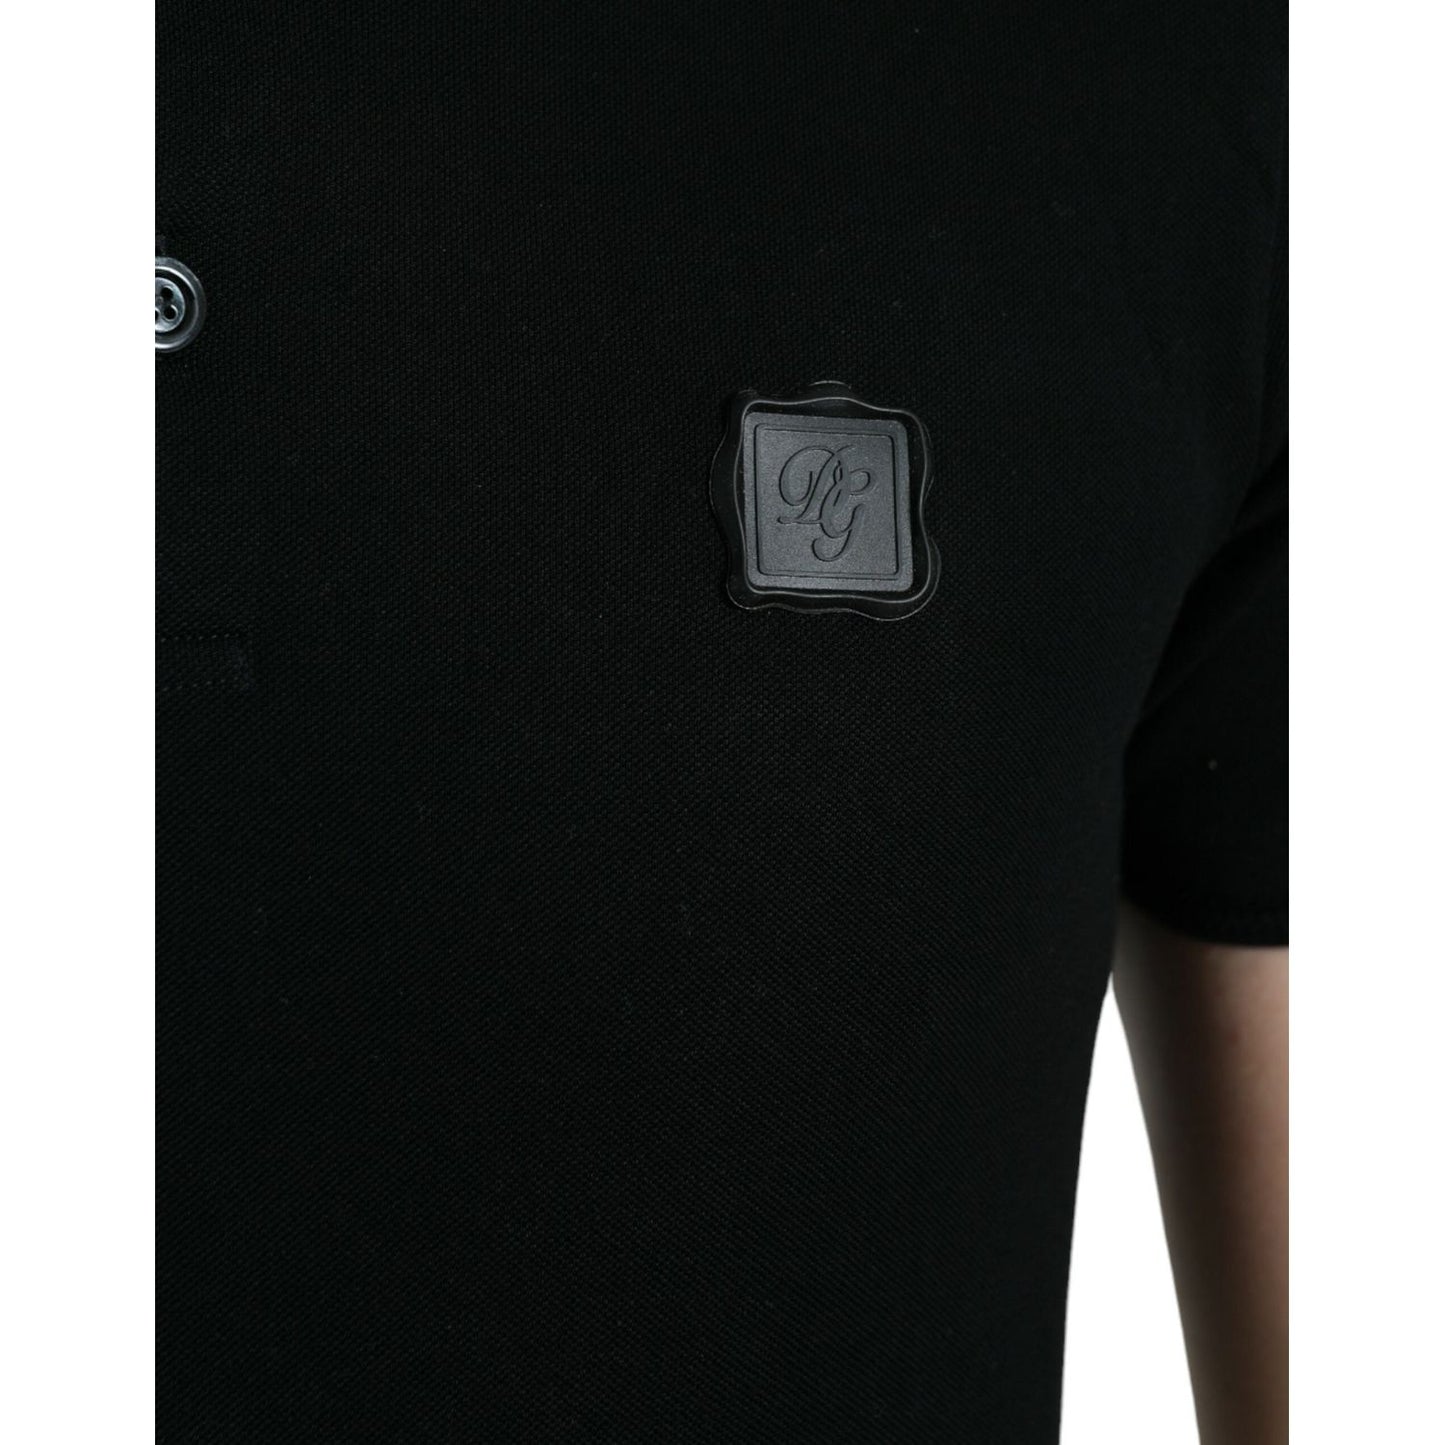 Dolce & Gabbana Elegant Black Cotton Polo Shirt elegant-black-cotton-polo-shirt